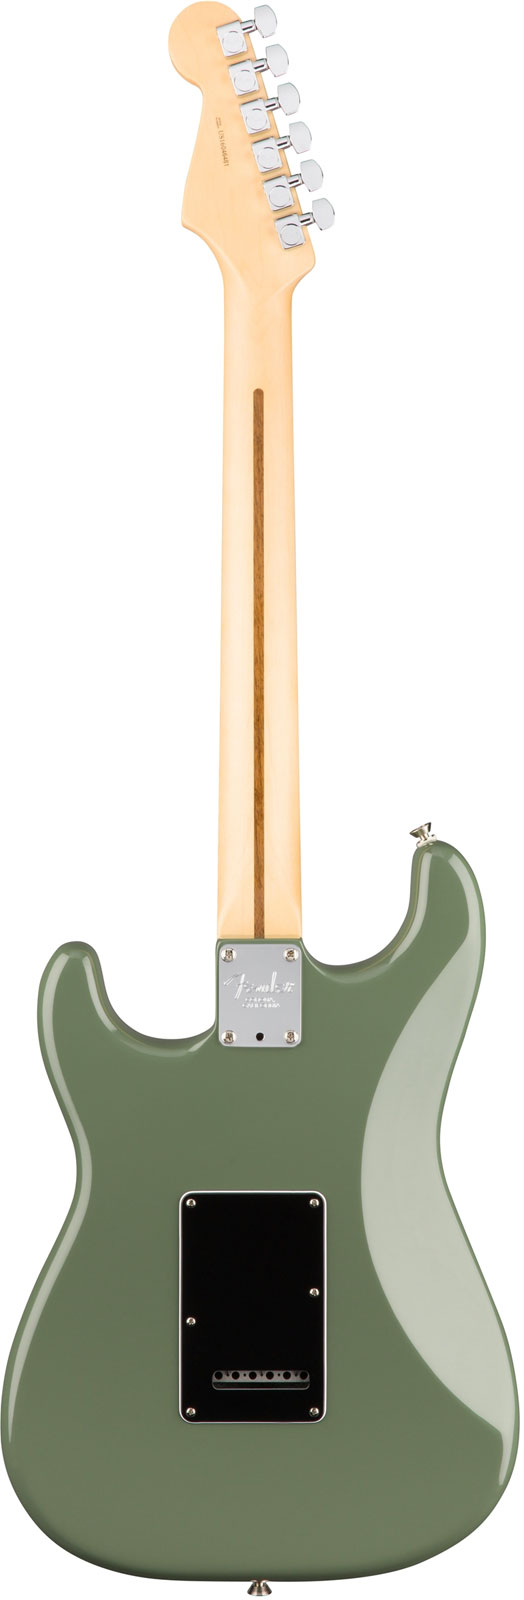 Fender Strat American Professional 2017 3s Usa Rw - Antique Olive - Guitare Électrique Forme Str - Variation 2